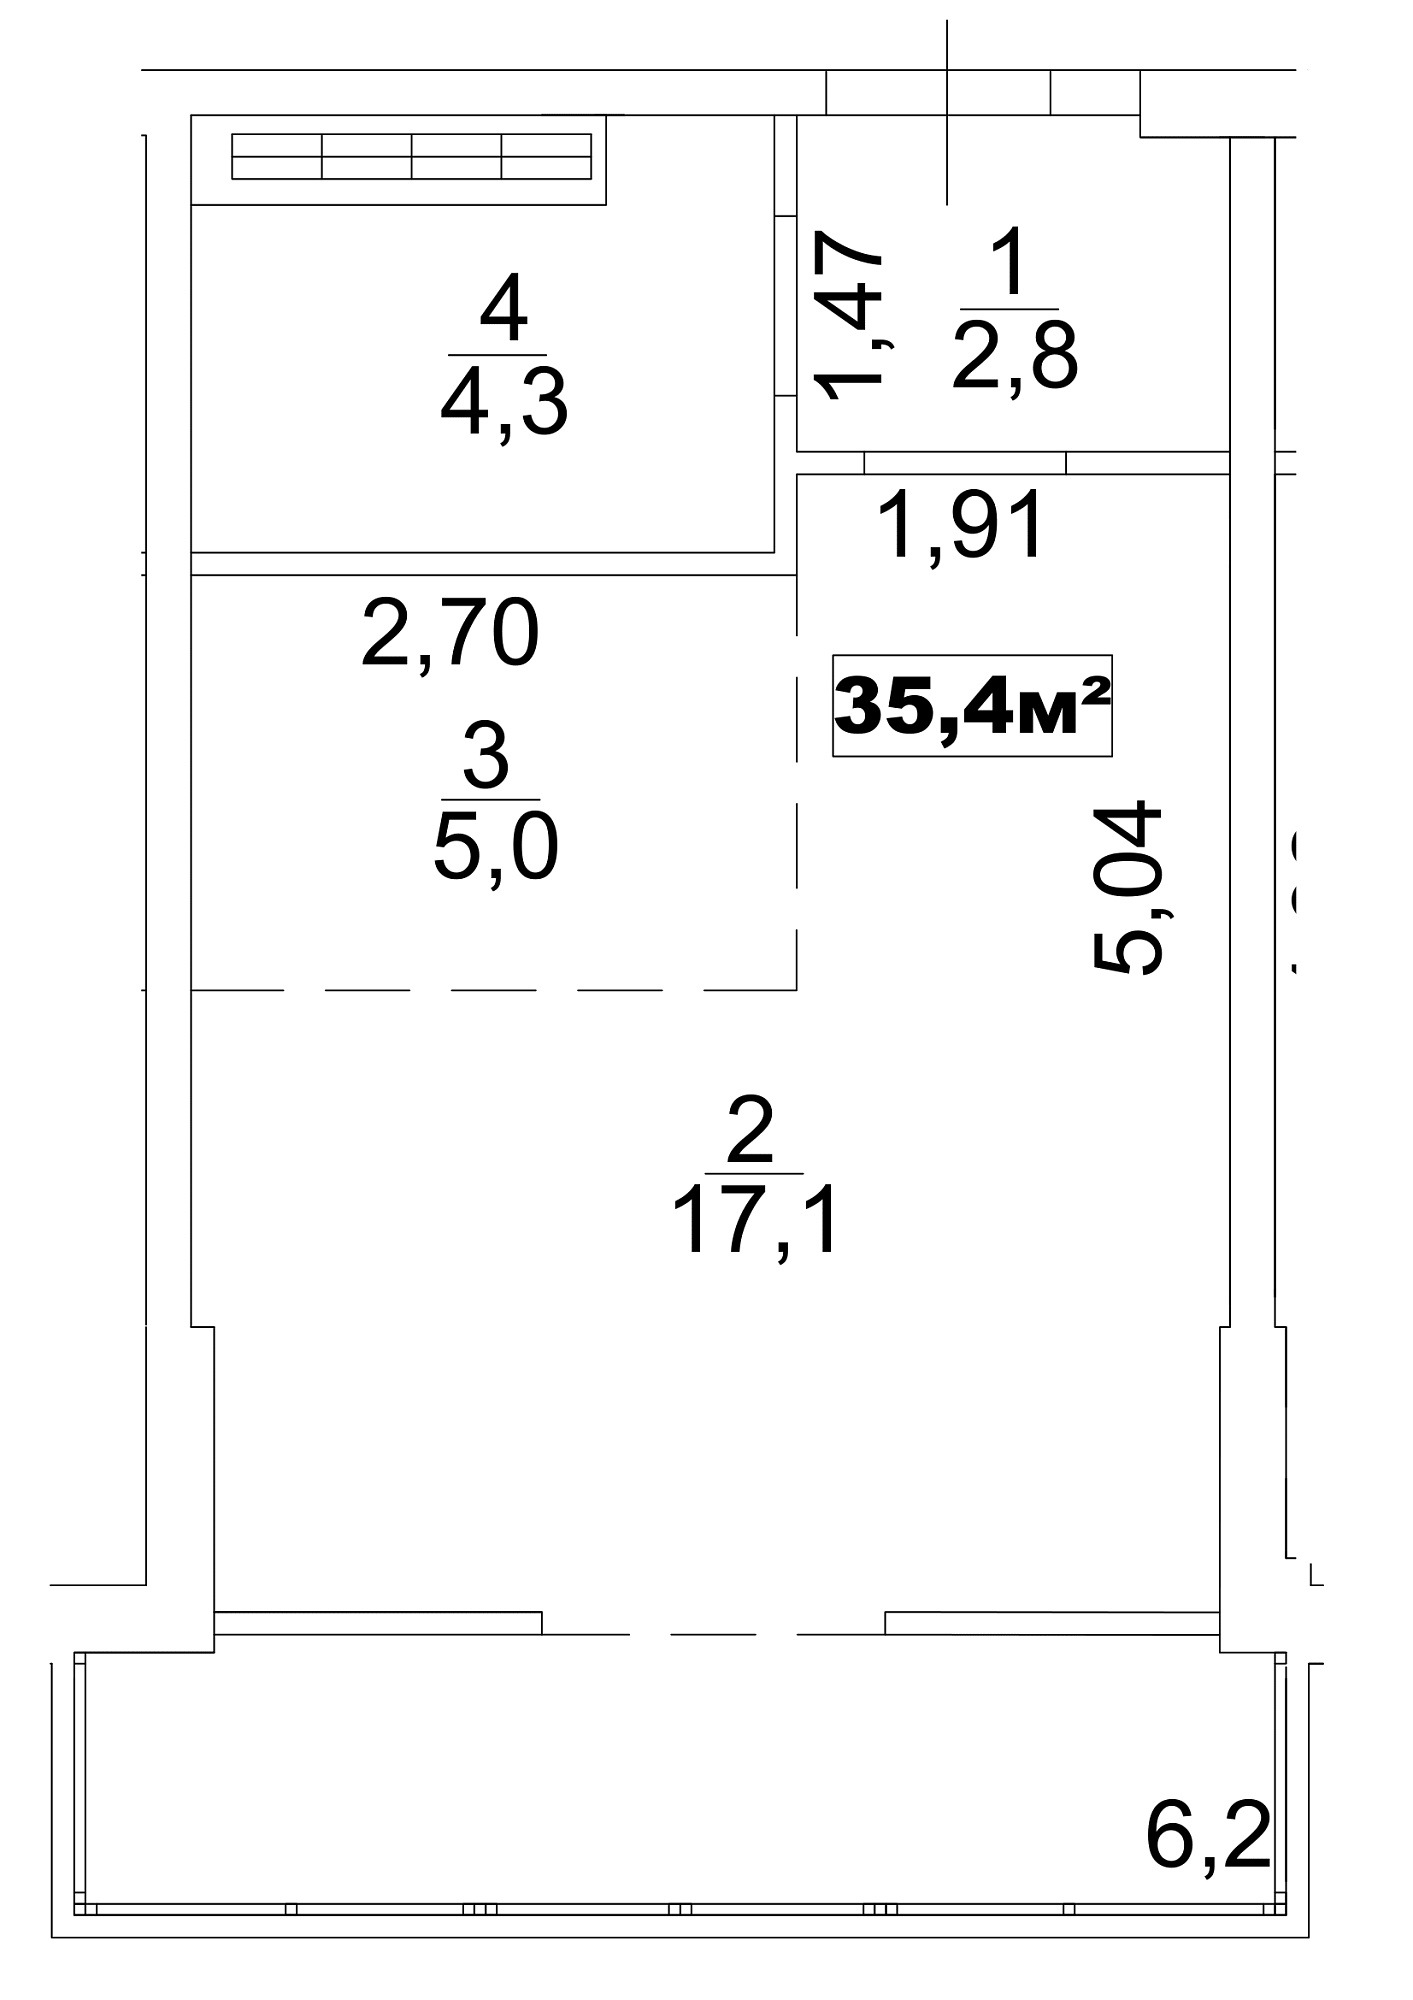 Planning Smart flats area 35.4m2, AB-13-05/0034б.